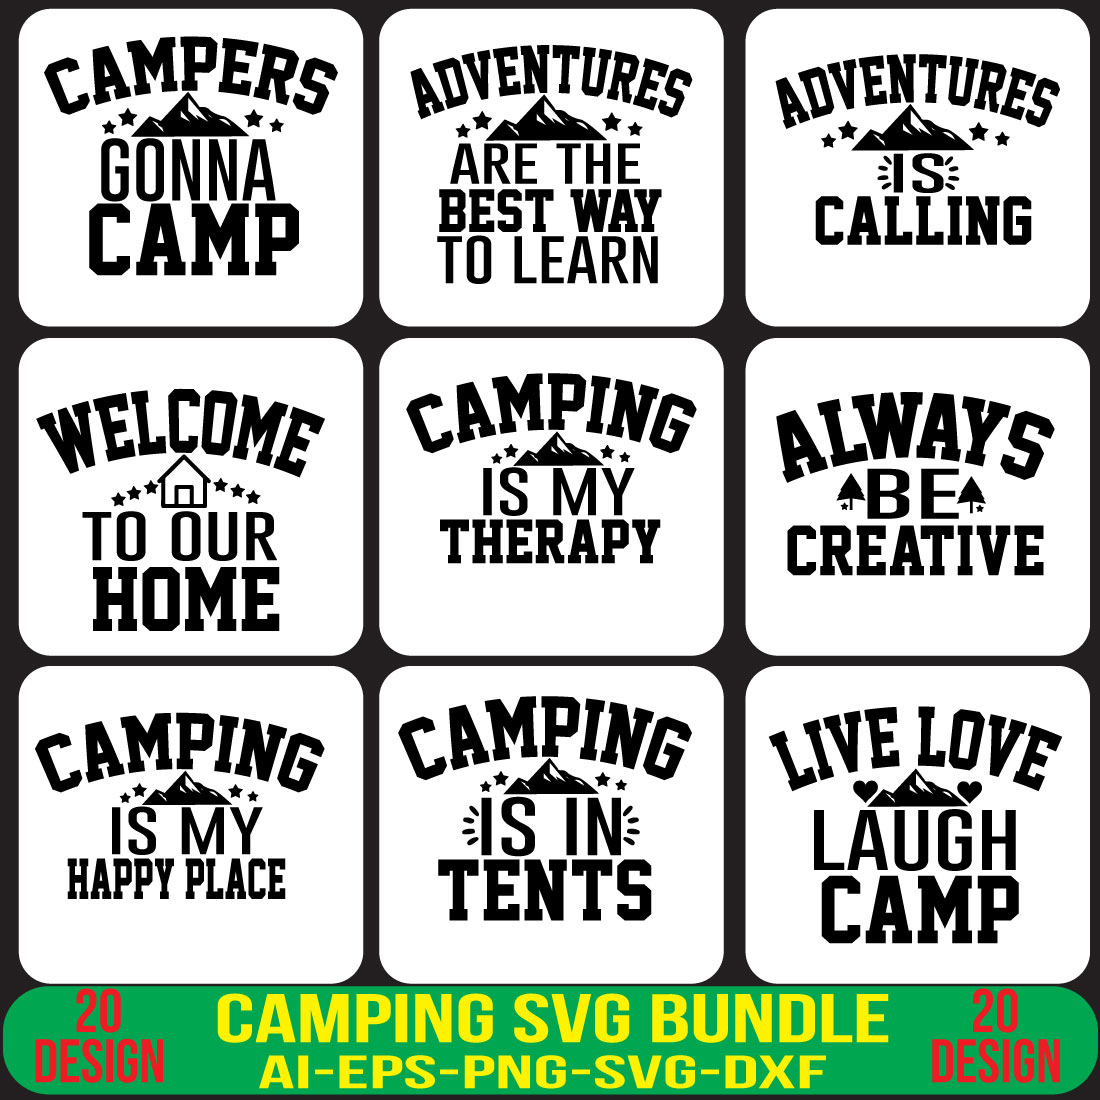 Camping SVG Bundle cover image.